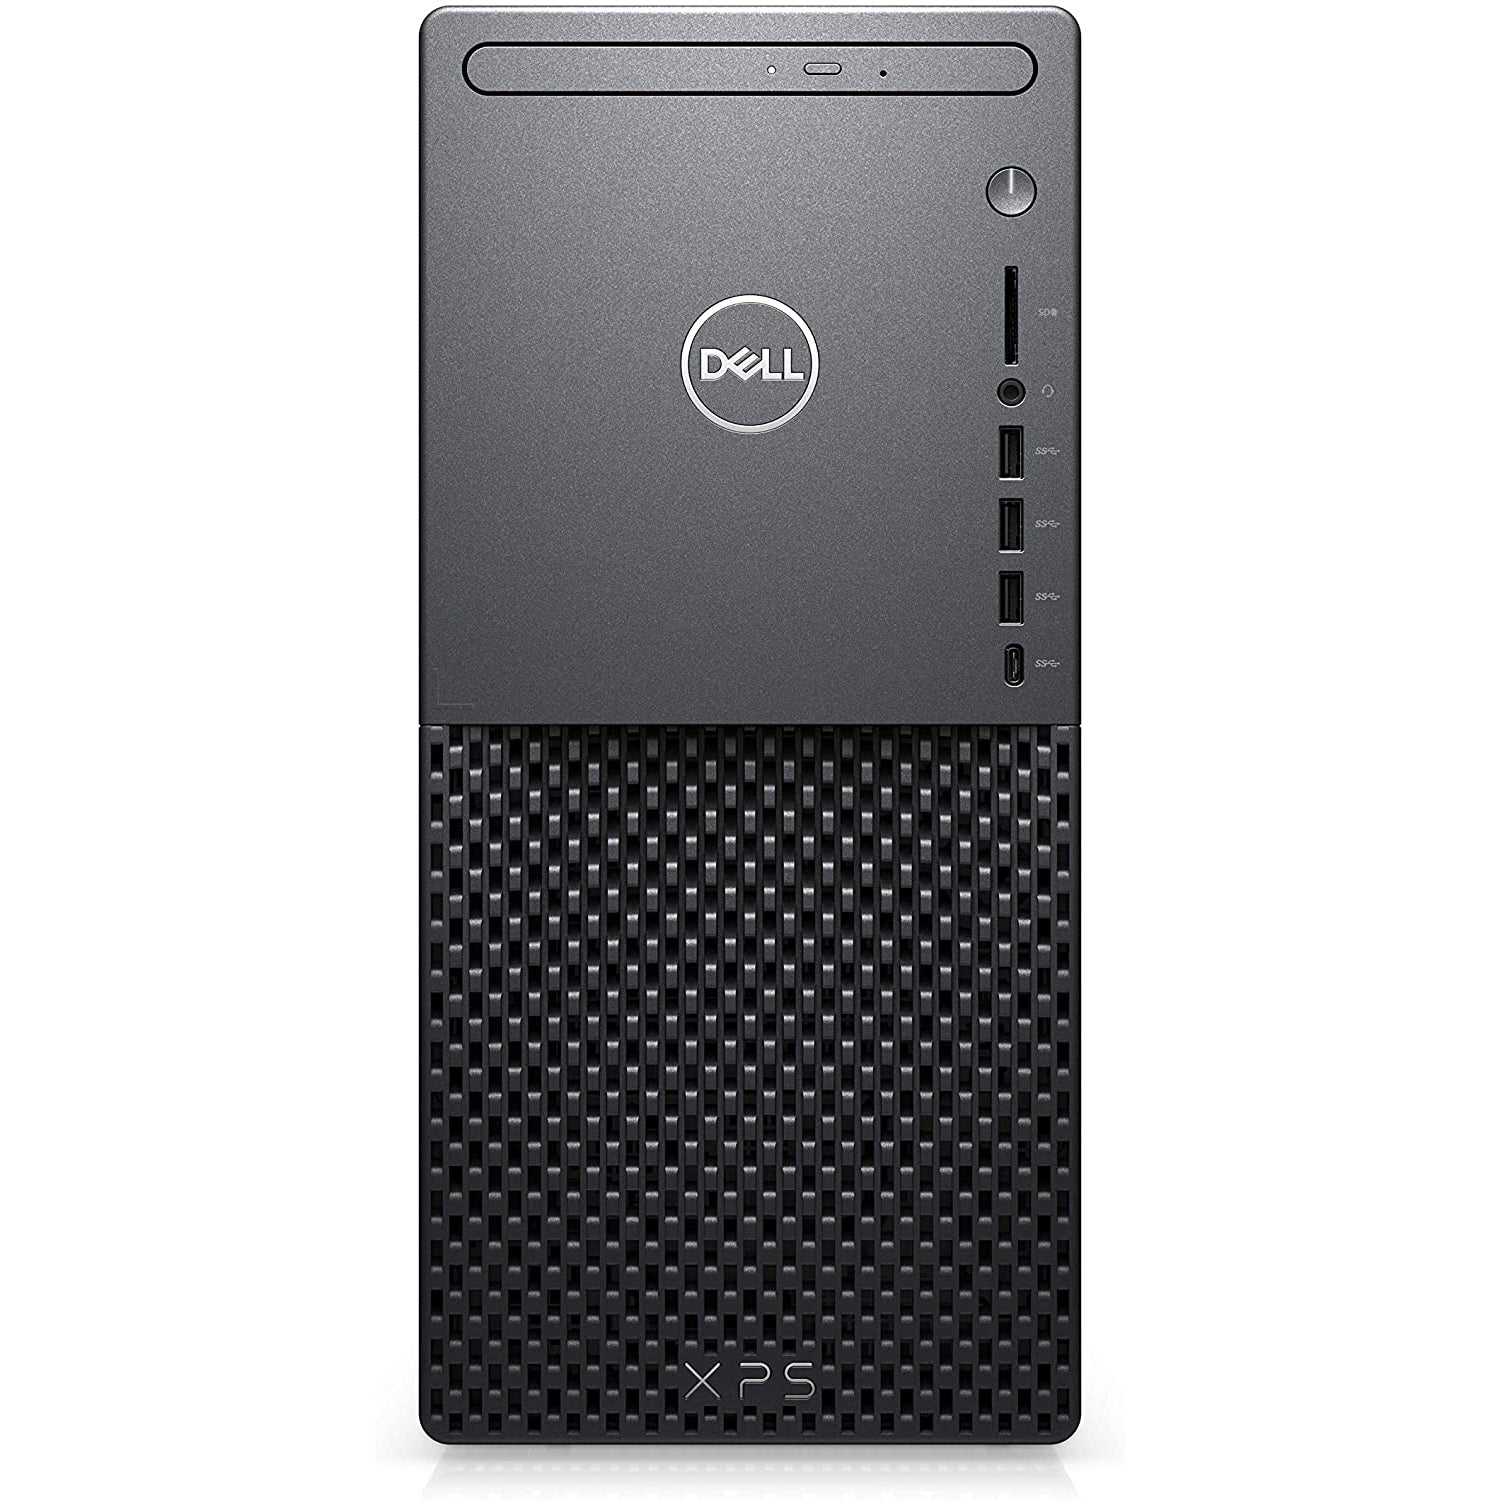 Dell XPS 8940 Desktop PC, Intel Core i7 10th Gen, 8GB RAM, 1TB HDD + 512GB NVMe, Black